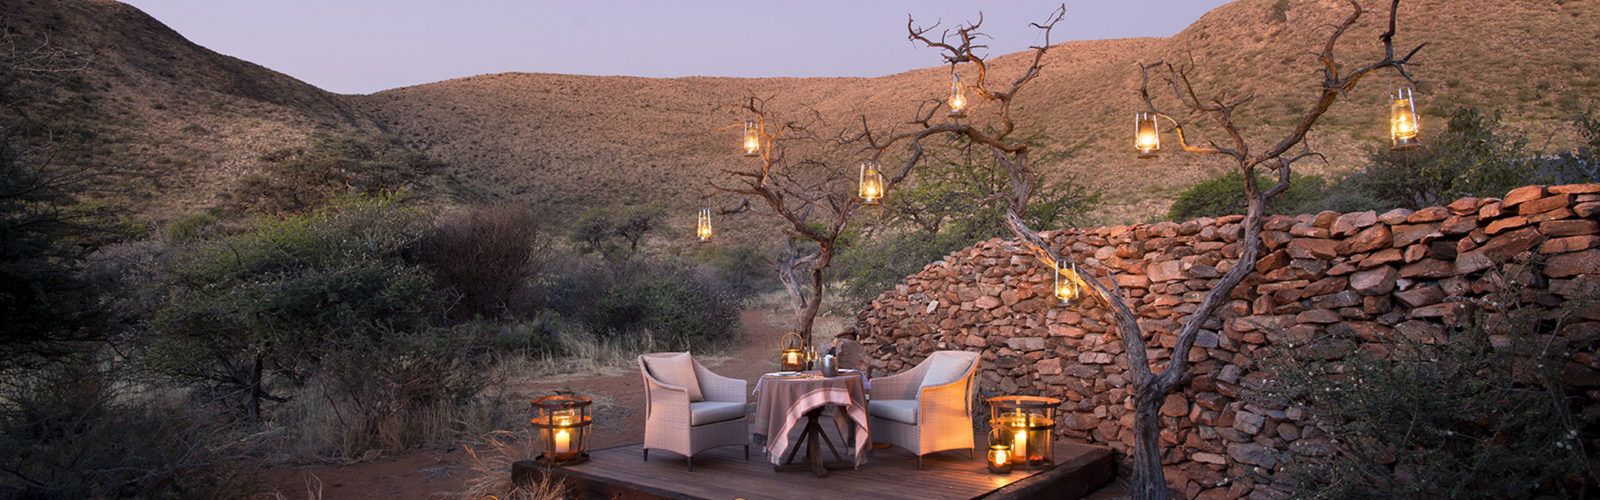 Tarkuni Private House, Tswalu Kalahari Reserve, South Africa